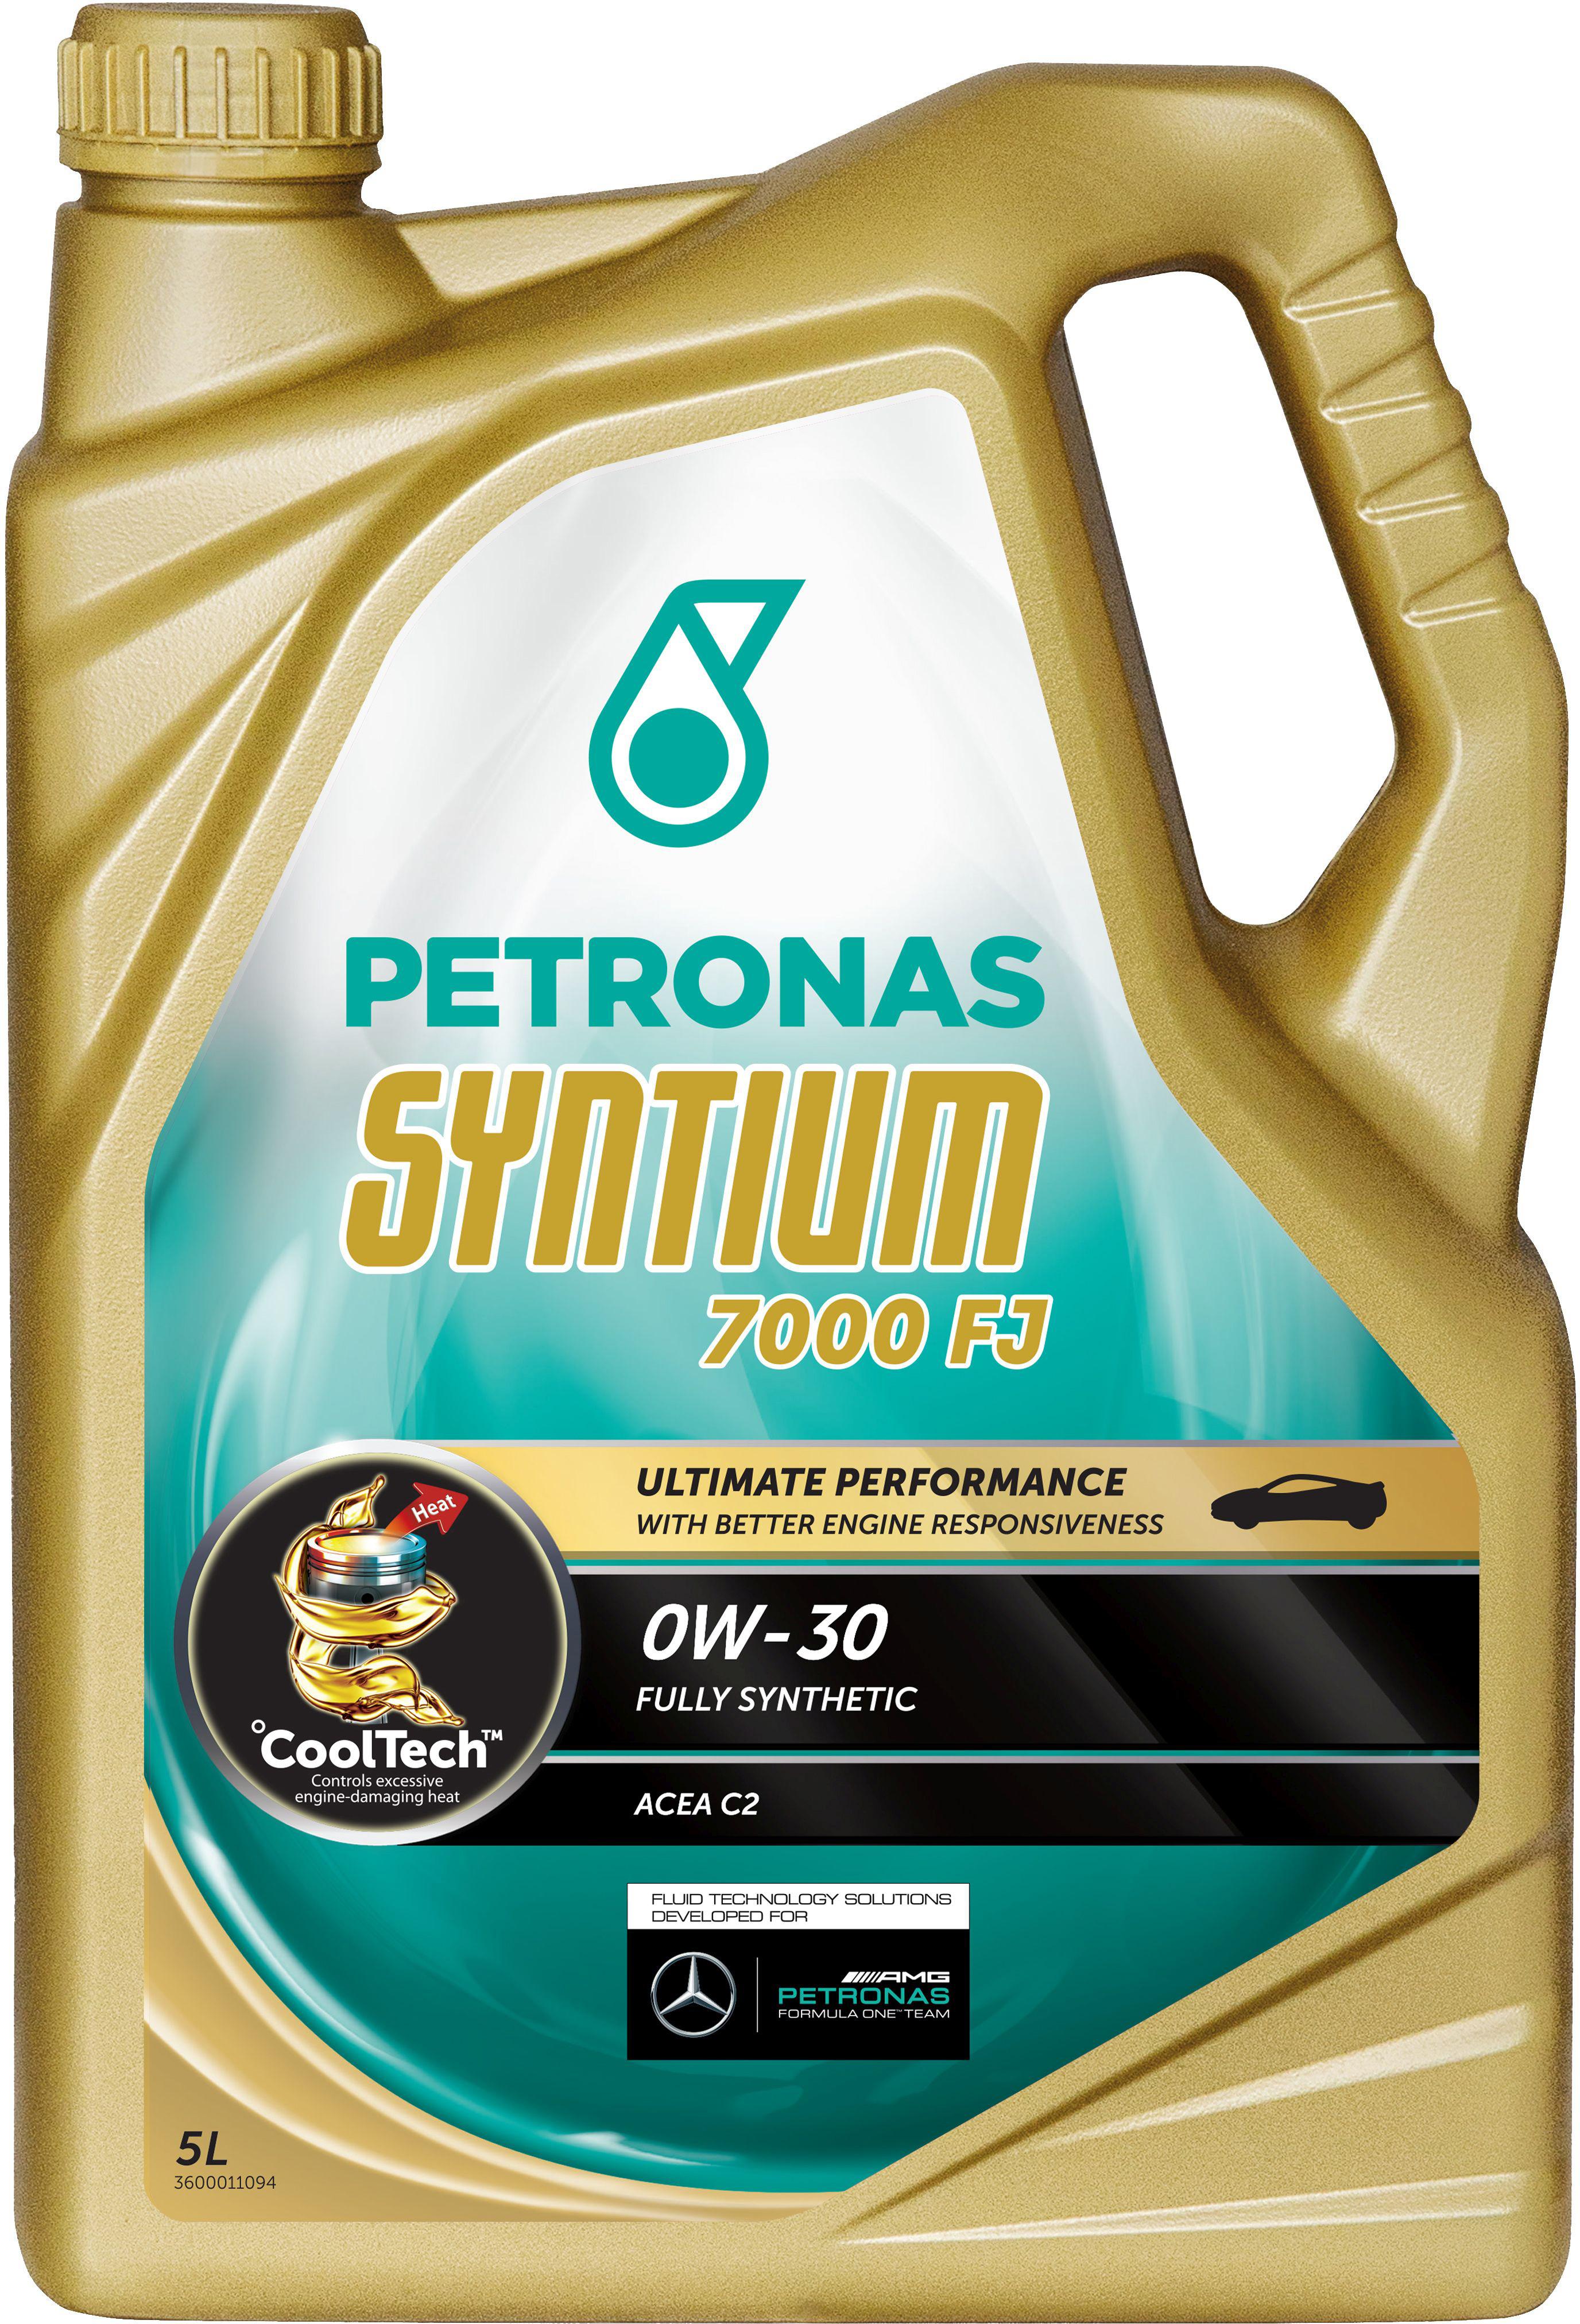 Petronas Syntium 7000 Fj Engine Oil 5L